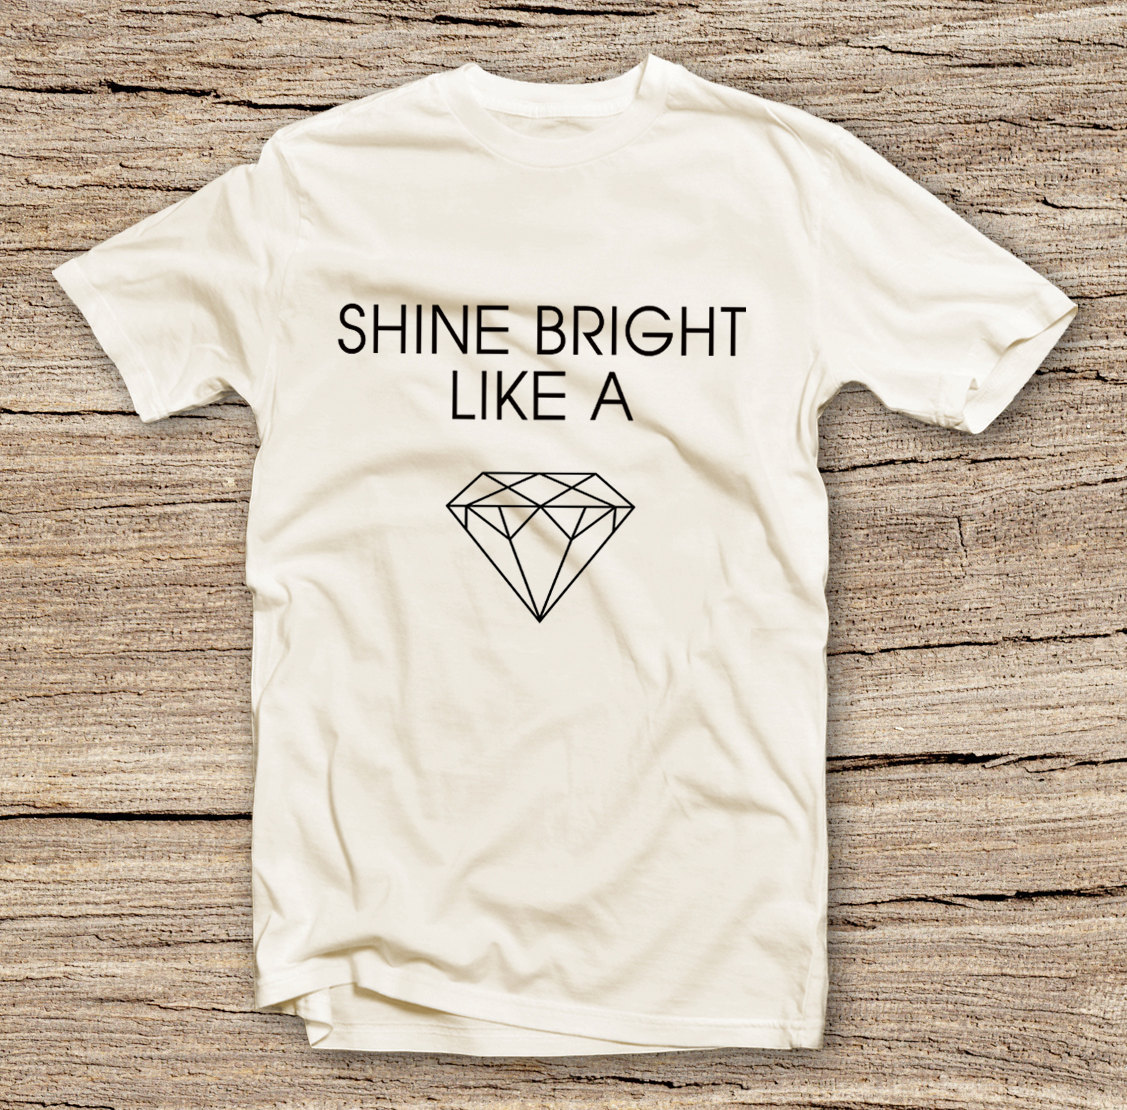 Pts-171 Letters Diamond Print T-shirt, Shine Bright Like Diamon Rihanna Fashion Shirts, Funny T-shirt, Cute T-shirts, Cool T-shirts